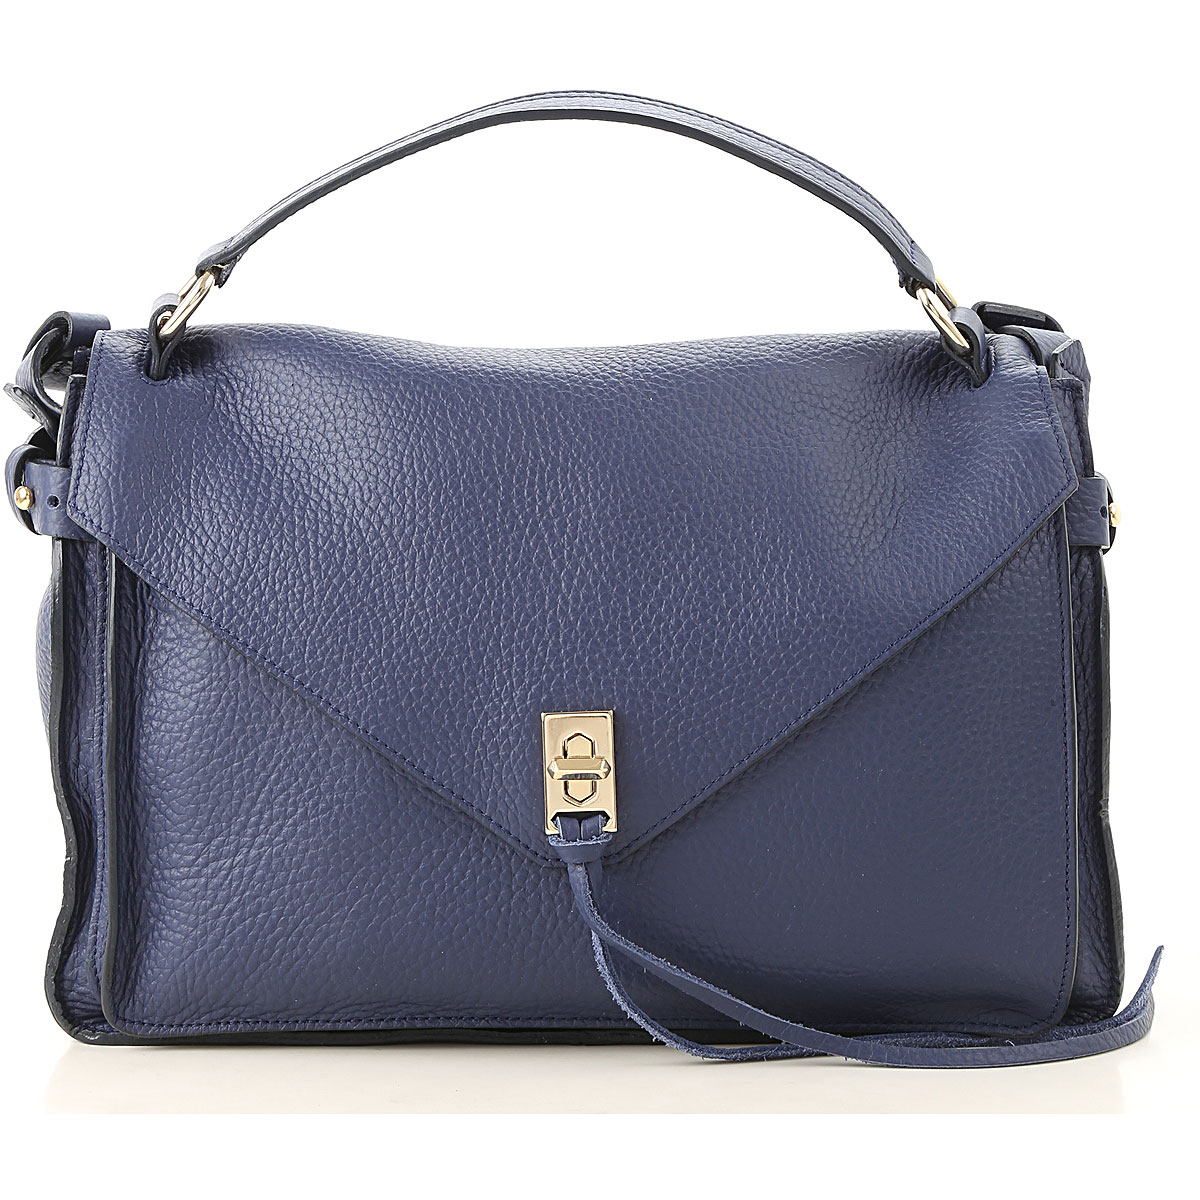 Handbags Rebecca Minkoff, Style code: hu18idnm13-483-